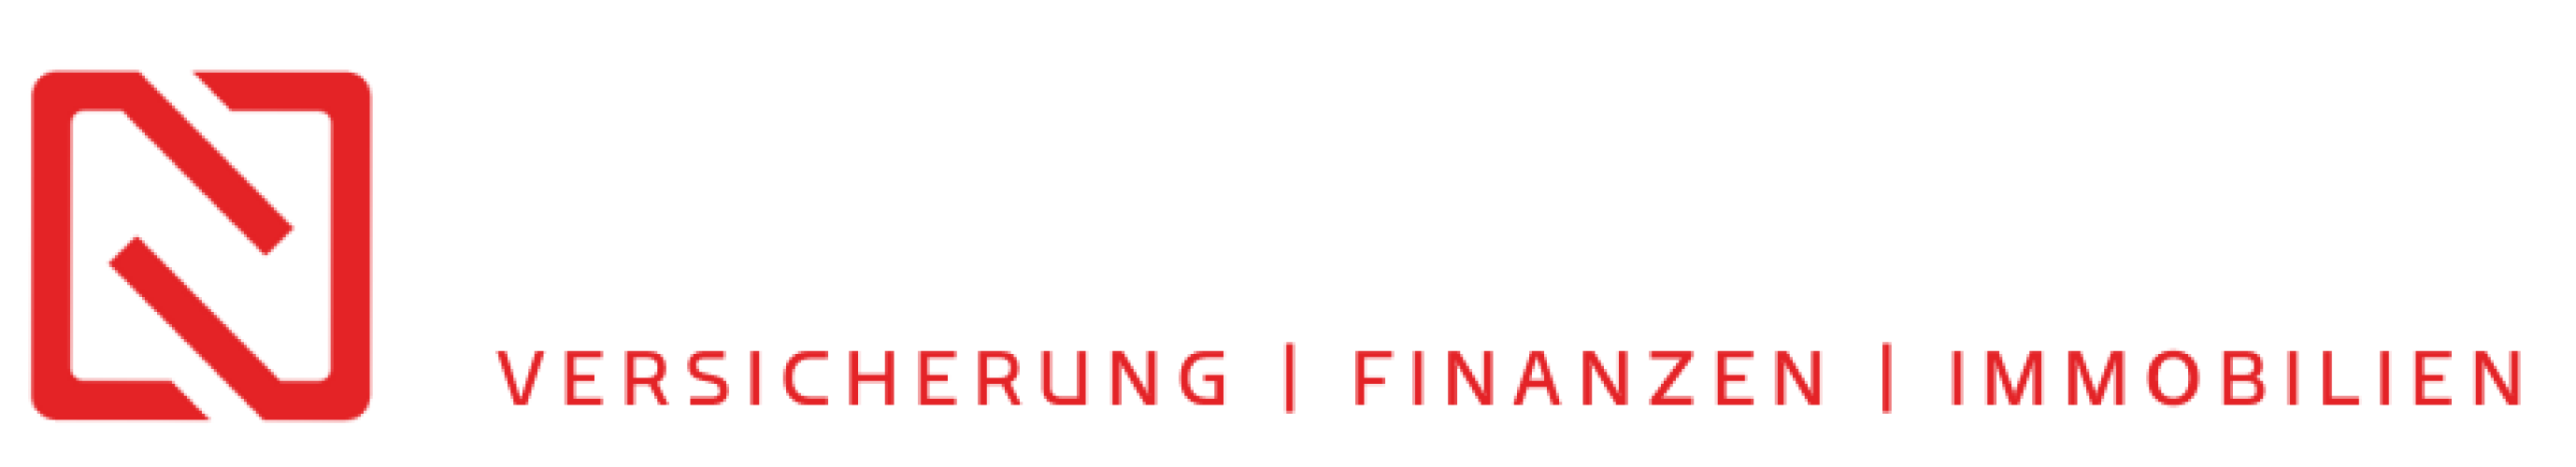 NV SWISS GmbH